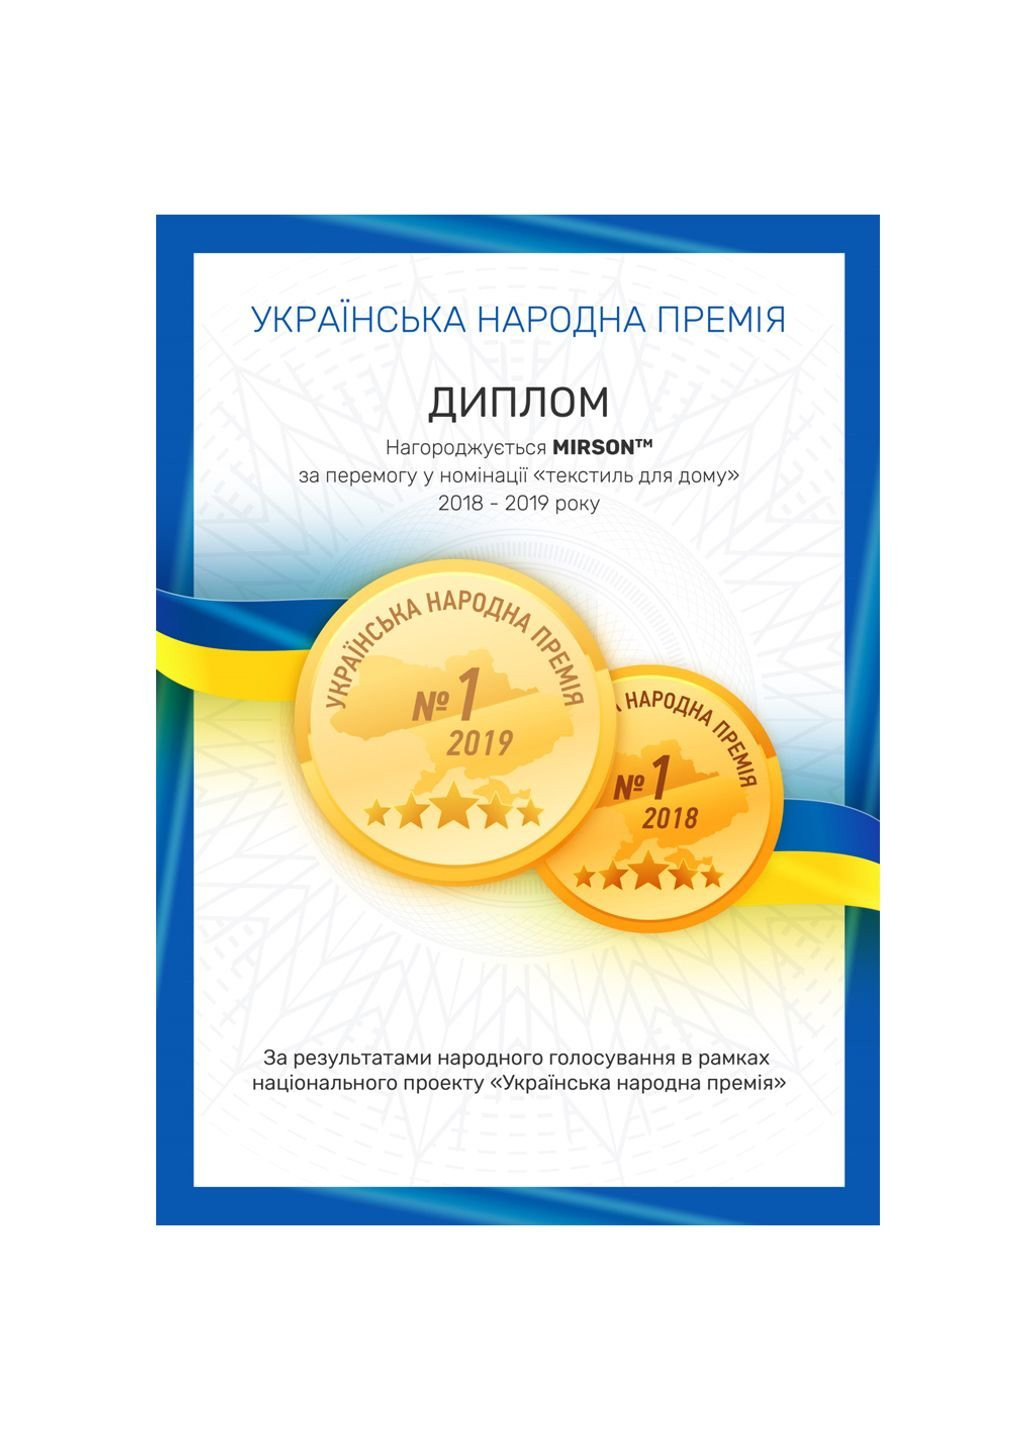 No Brand полотенце mirson набор банный №5014 softness beige 50x90, 70x140 (2200003183061) бежевый производство - Украина